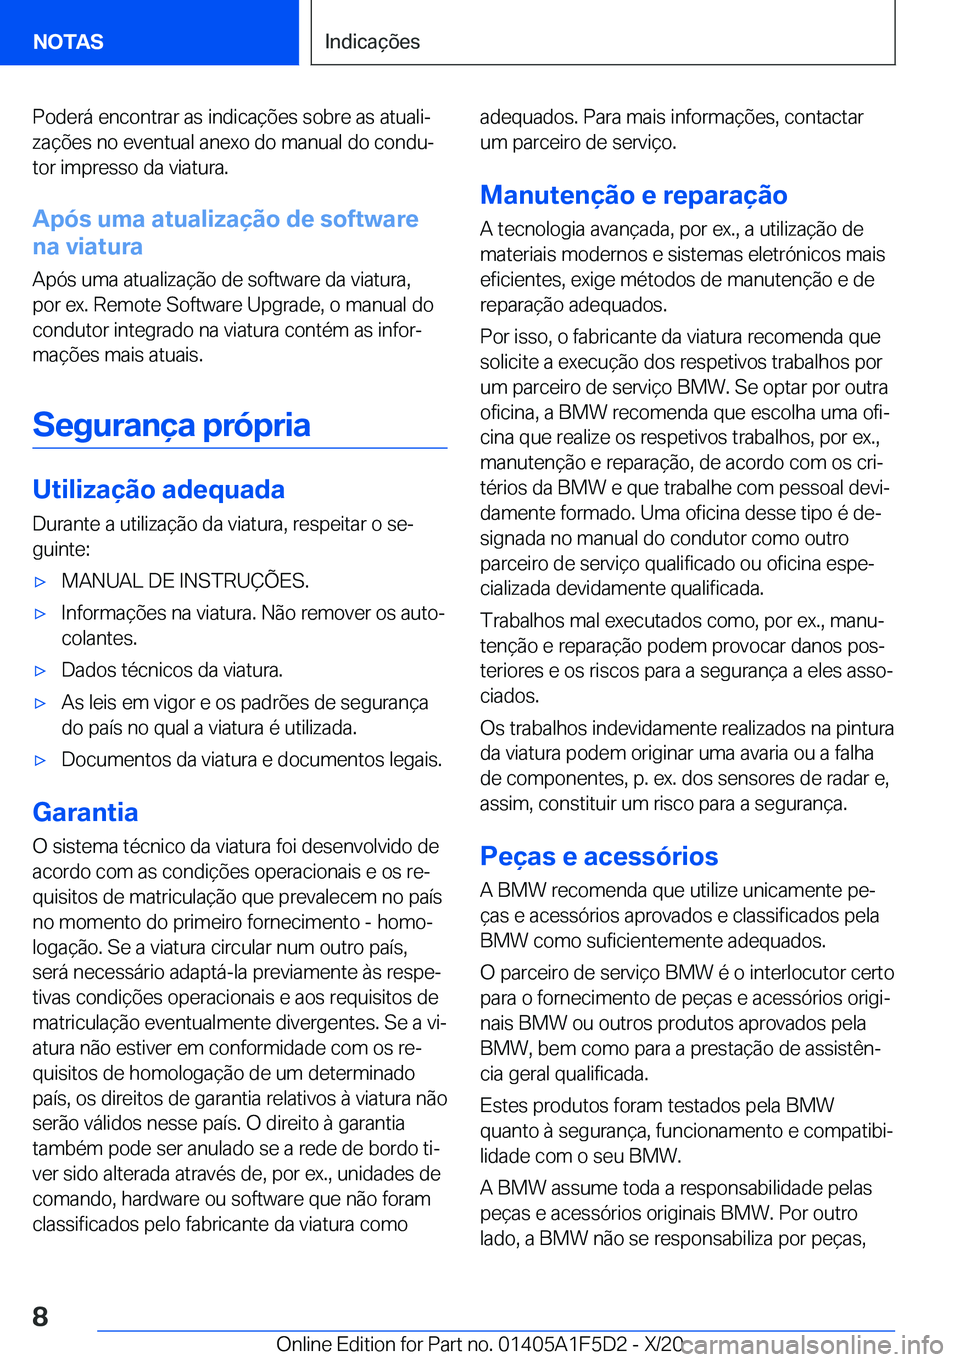 BMW X4 M 2021  Manual do condutor (in Portuguese) �P�o�d�e�r�á��e�n�c�o�n�t�r�a�r��a�s��i�n�d�i�c�a�